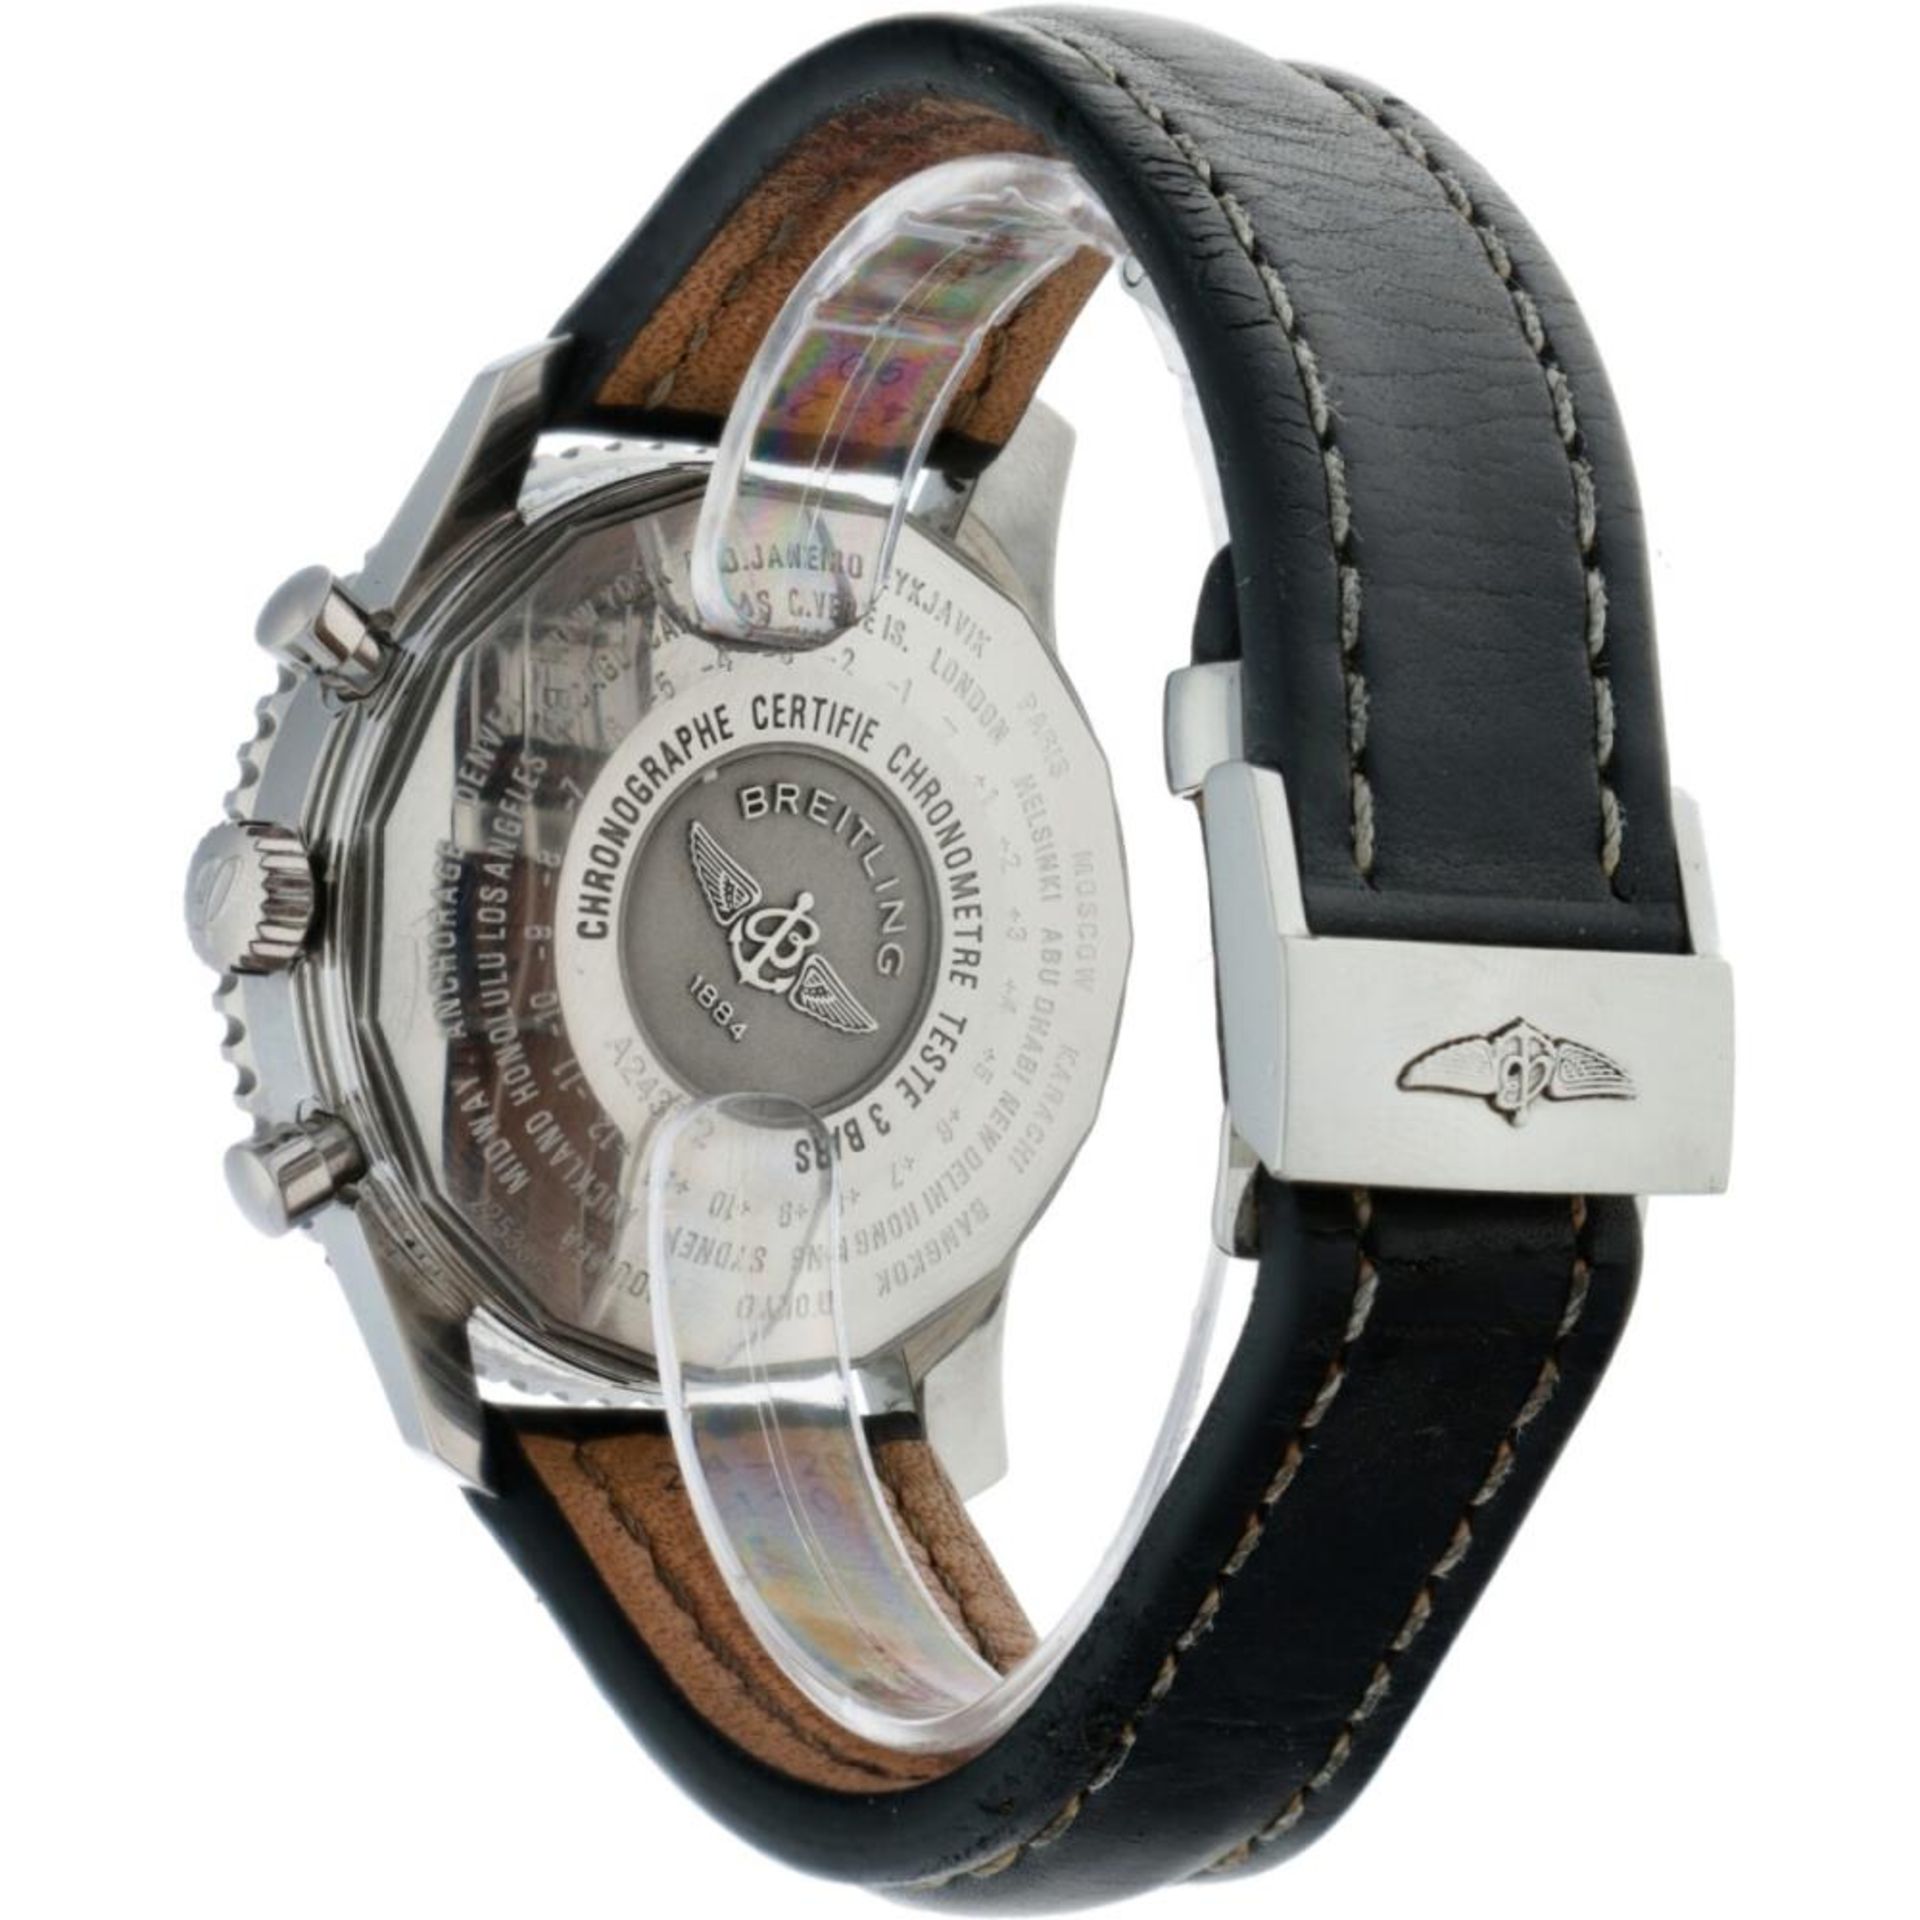 Breitling Navitimer A24322 - Men's watch - 2007. - Image 3 of 6